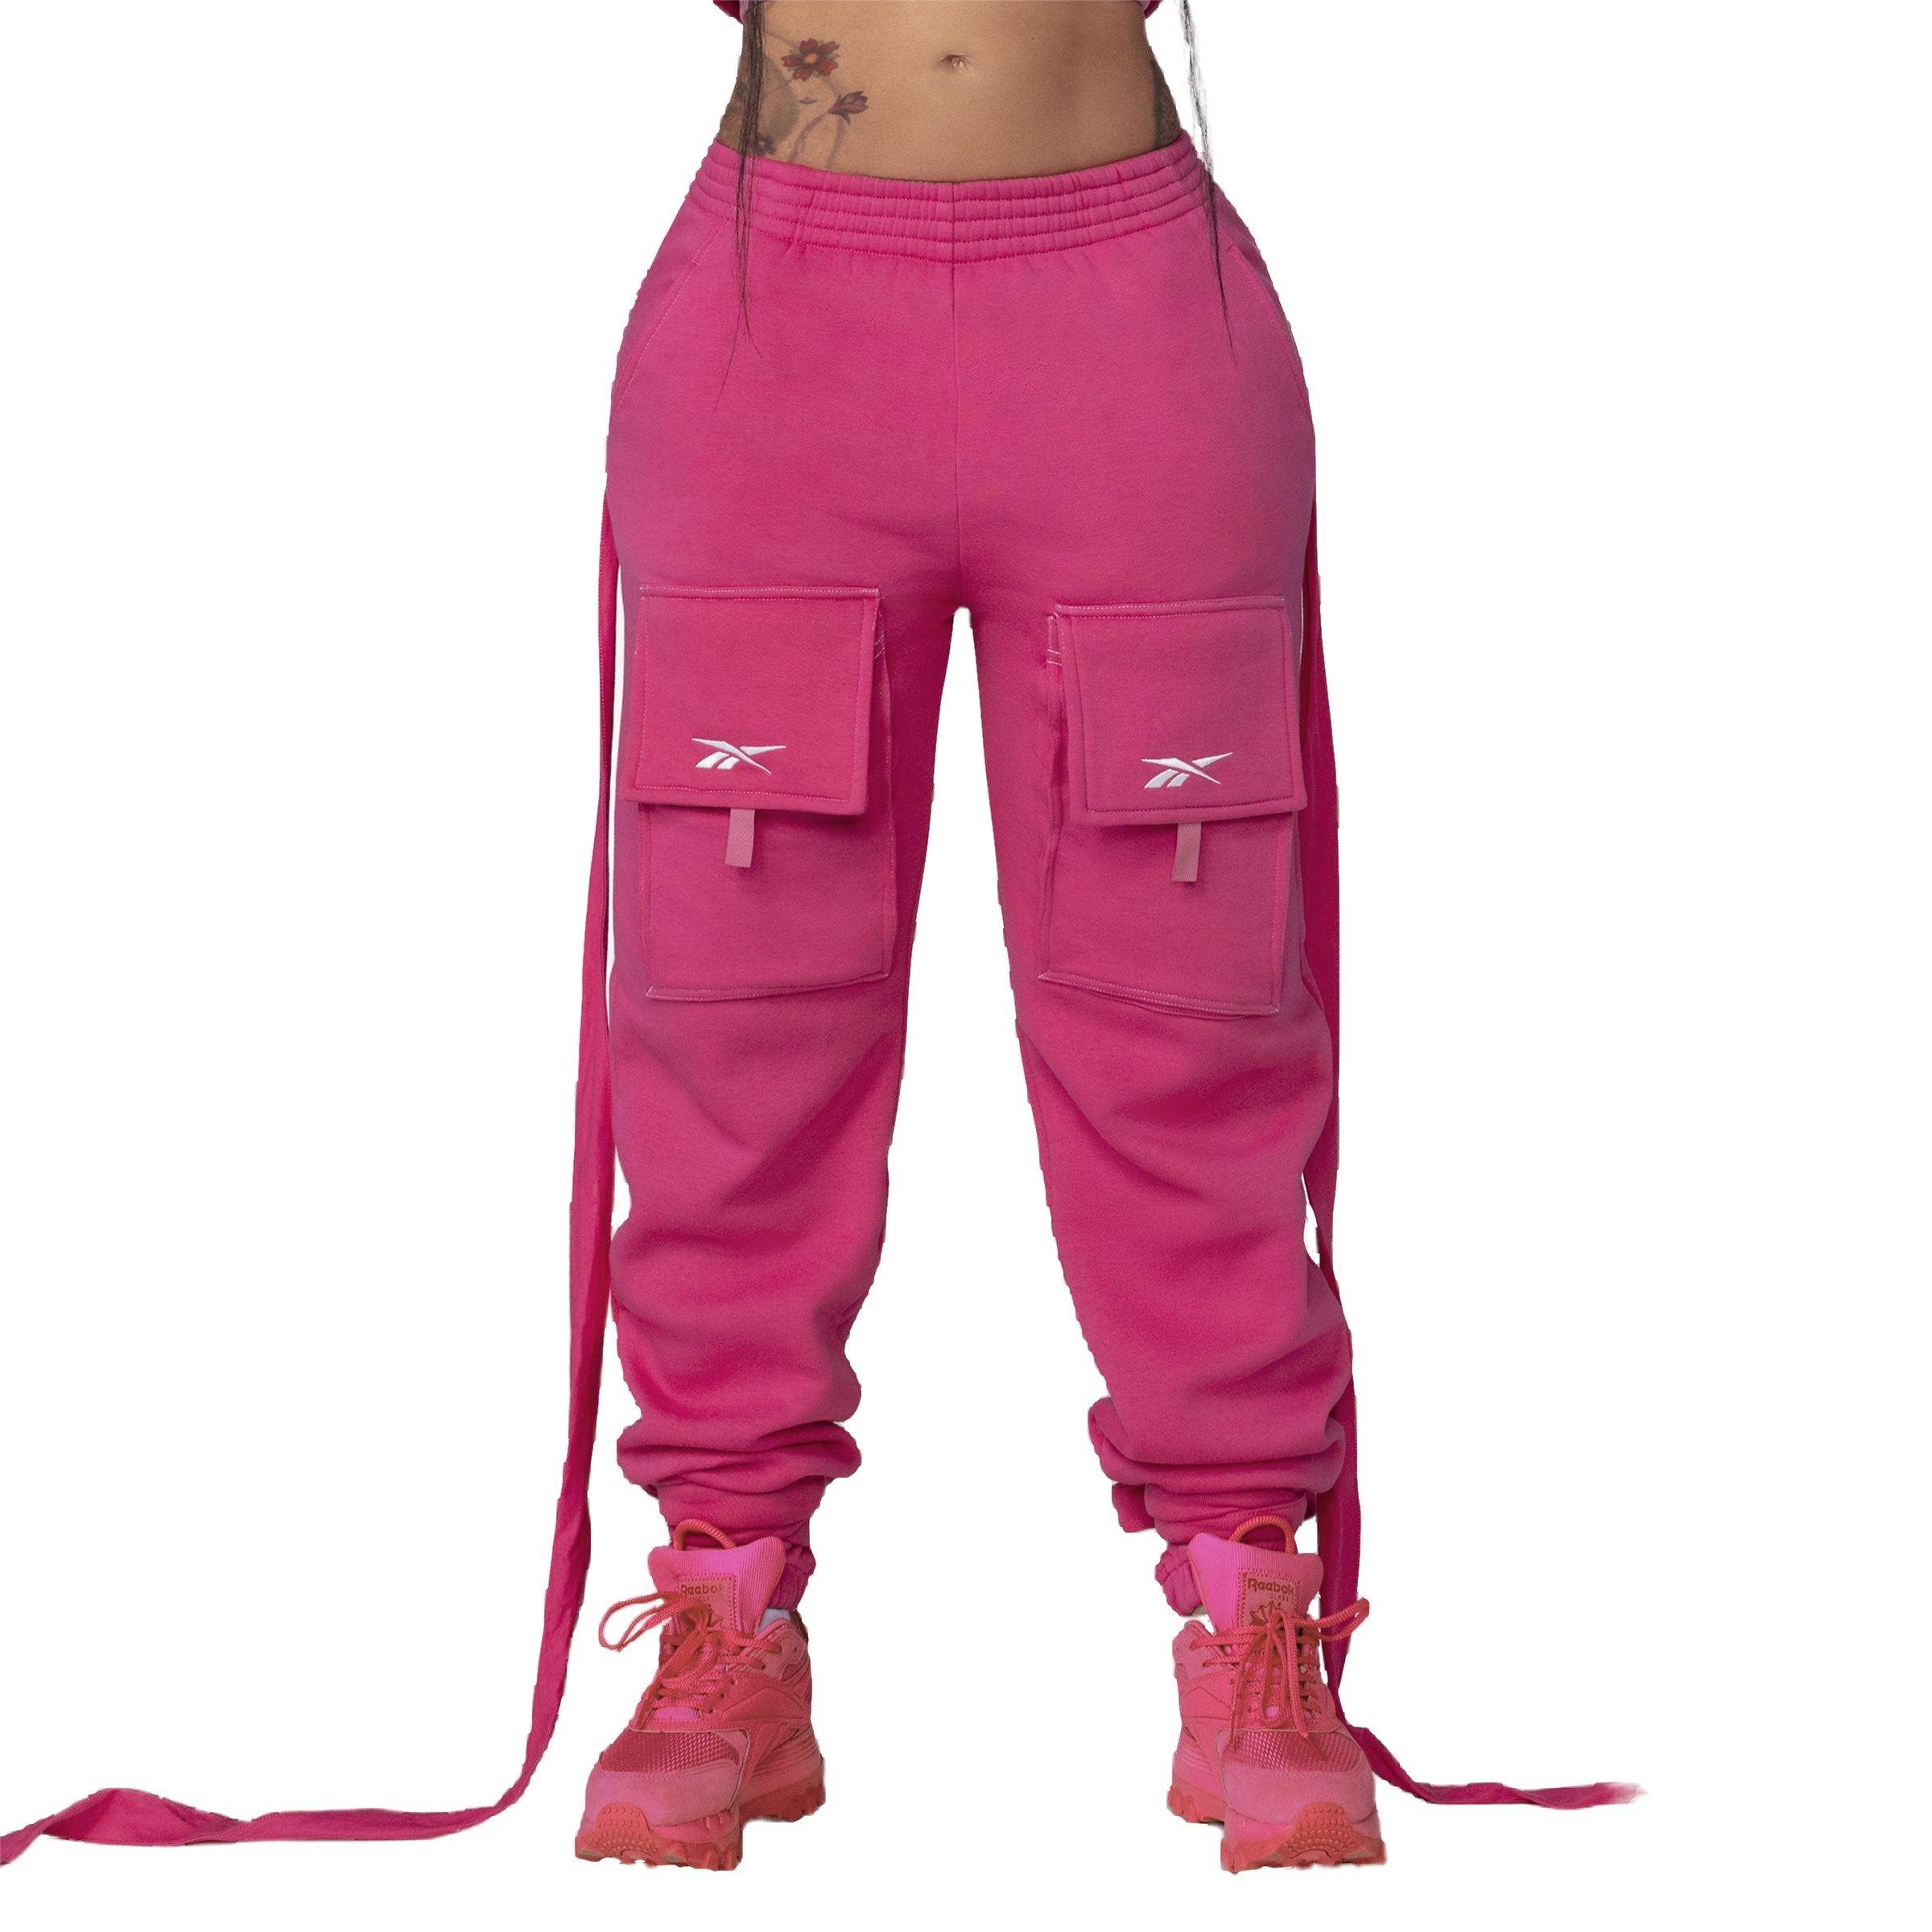 Reebok x Cardi B high waisted sweatpants in pink